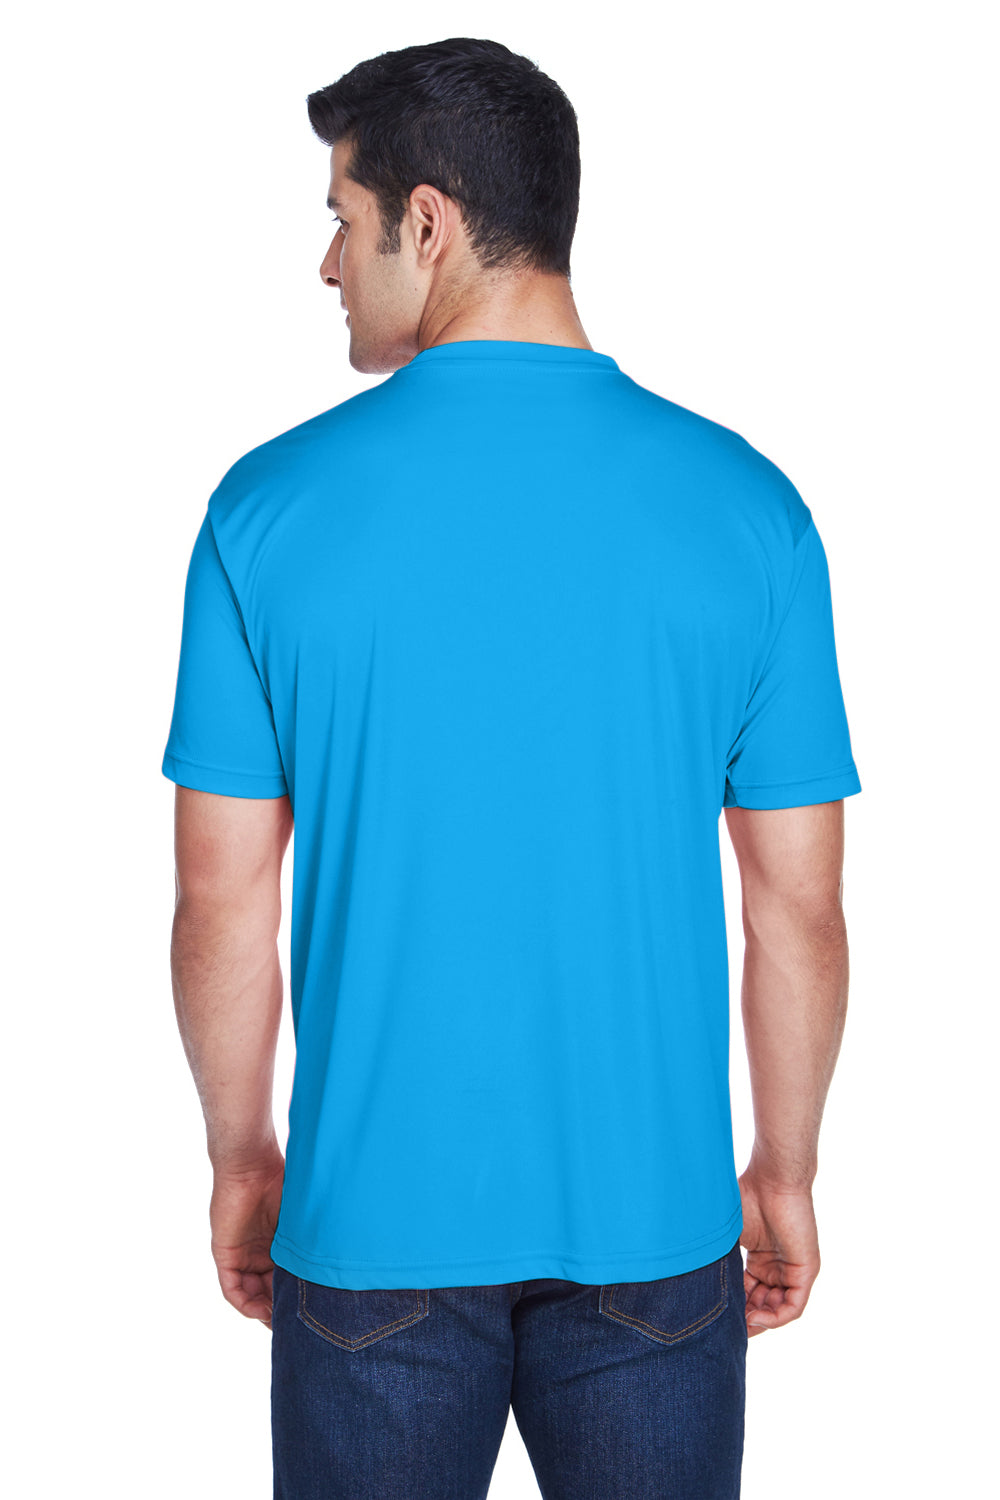 UltraClub 8420 Mens Cool & Dry Performance Moisture Wicking Short Sleeve Crewneck T-Shirt Sapphire Blue Back